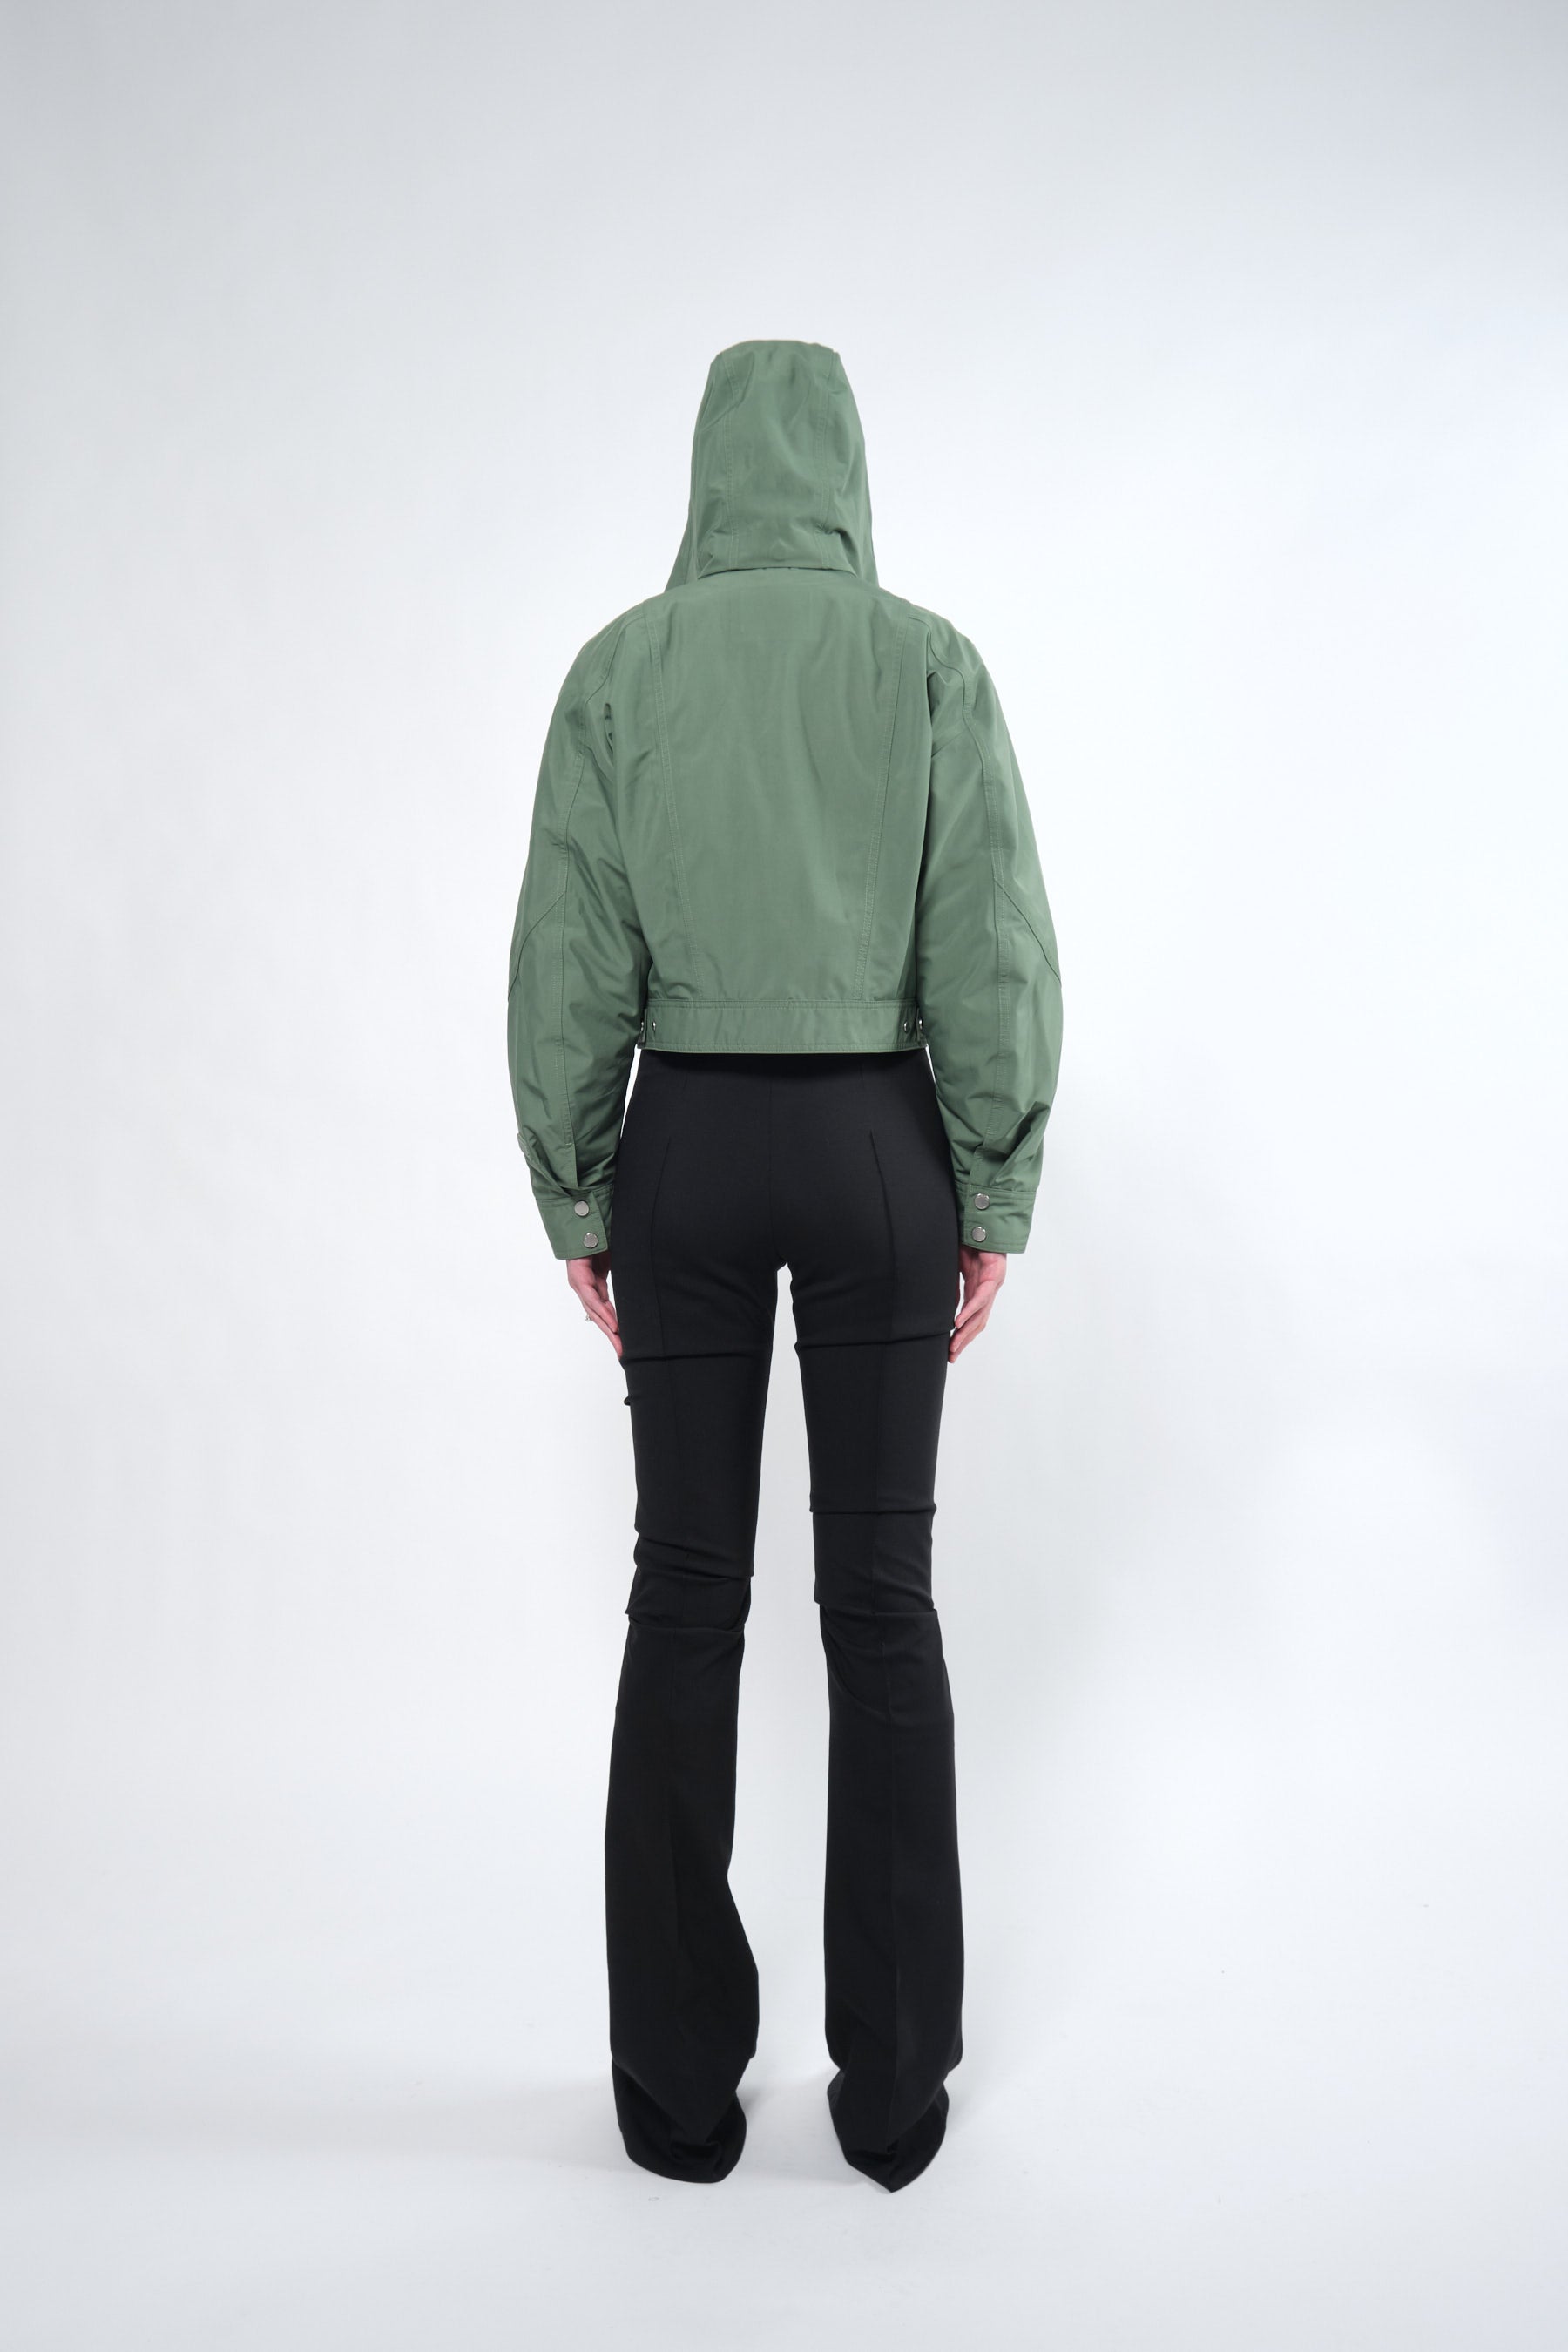  3L Green Waterproof Crop Rain Jacket with Hood - Adhere To  - 8